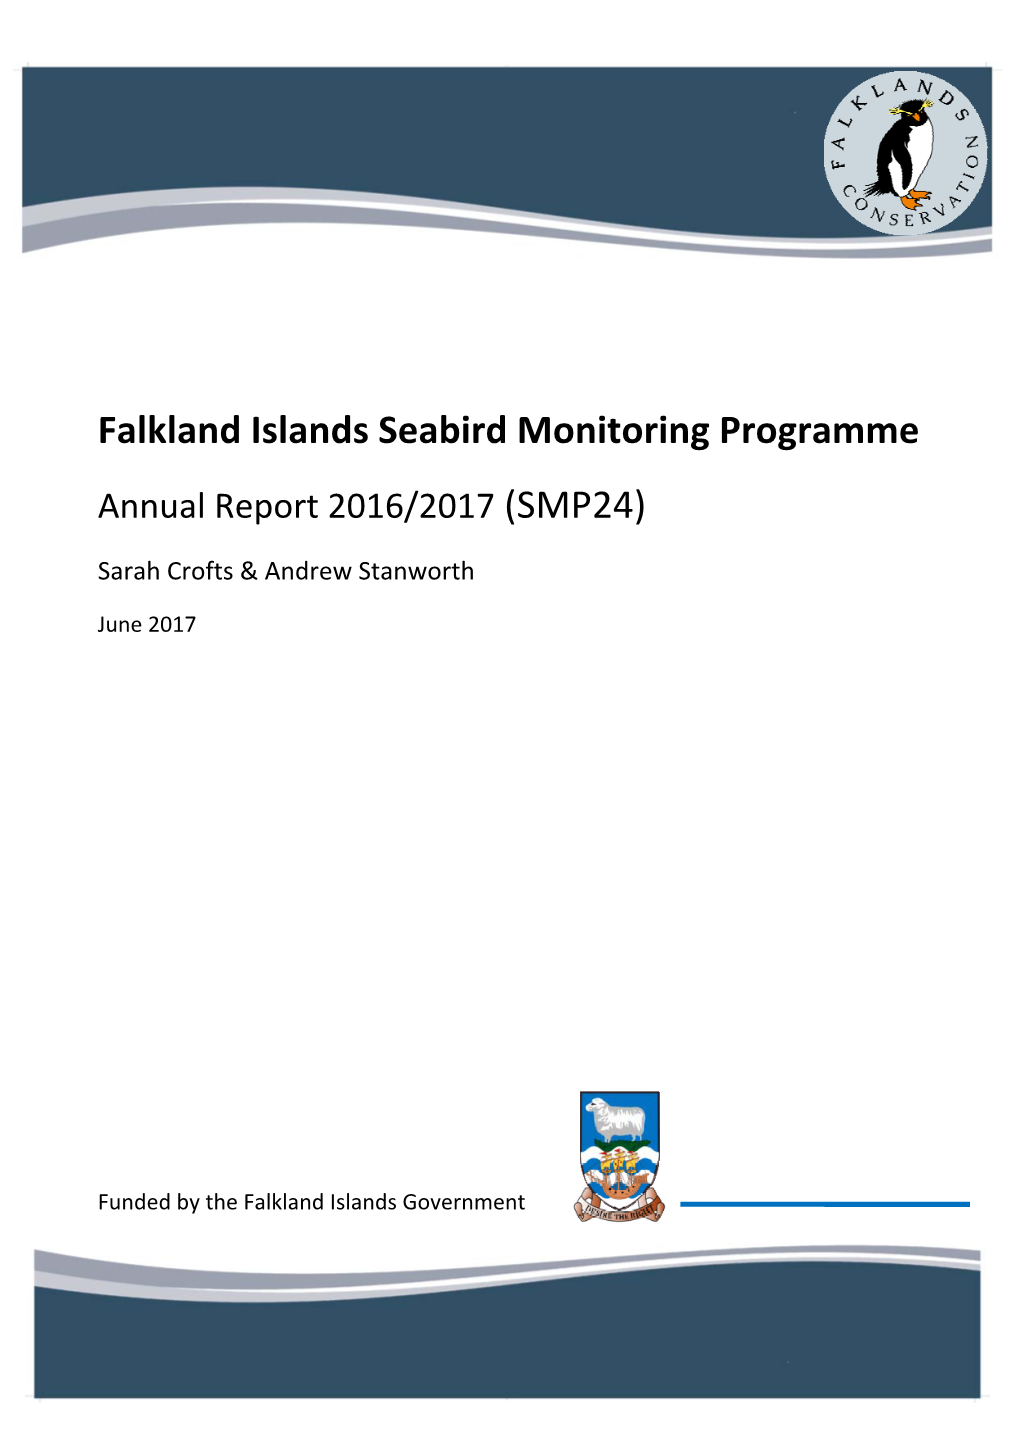 Falkland Islands Seabird Monitoring Programme Annual Report 2016/2017 (SMP24)